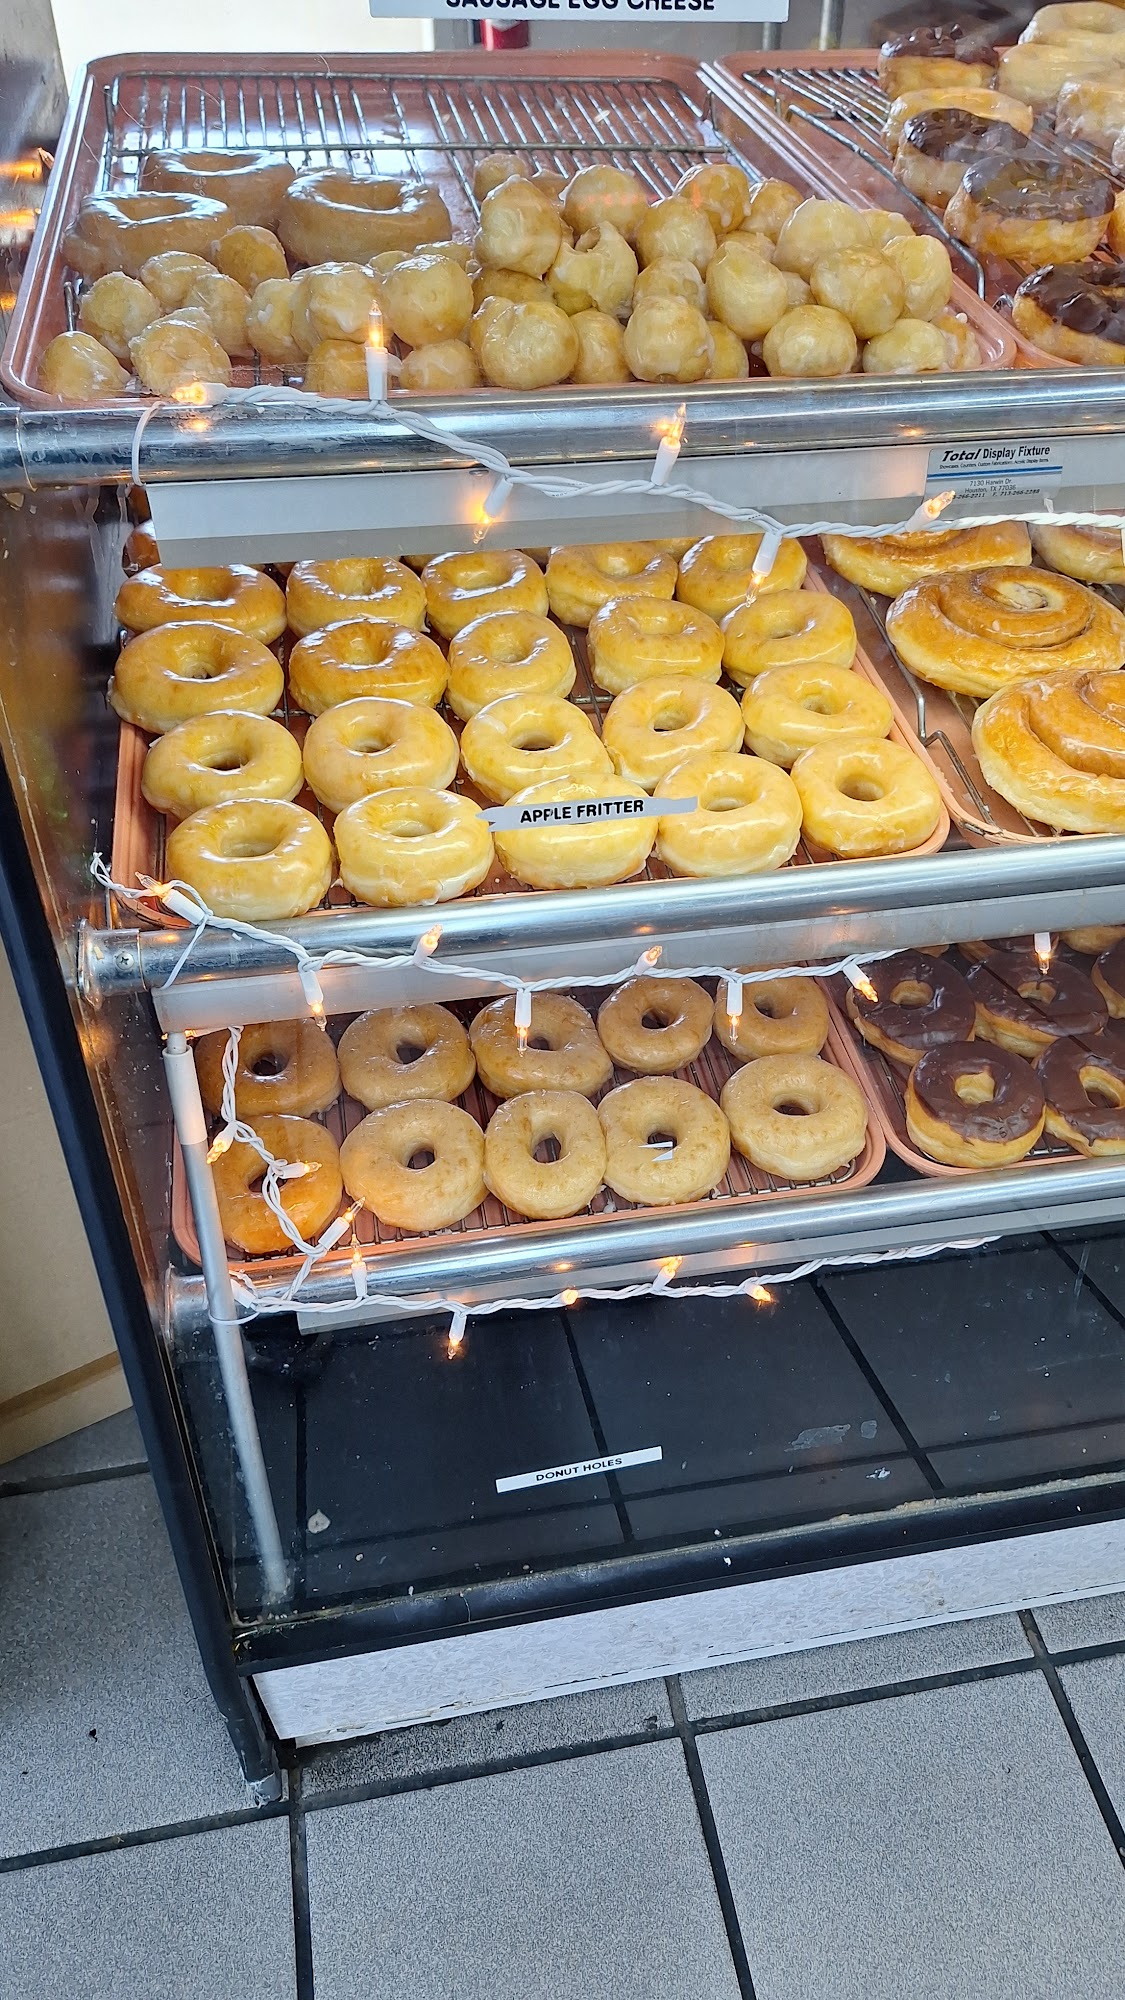 U.S.A. Donuts & Kolaches